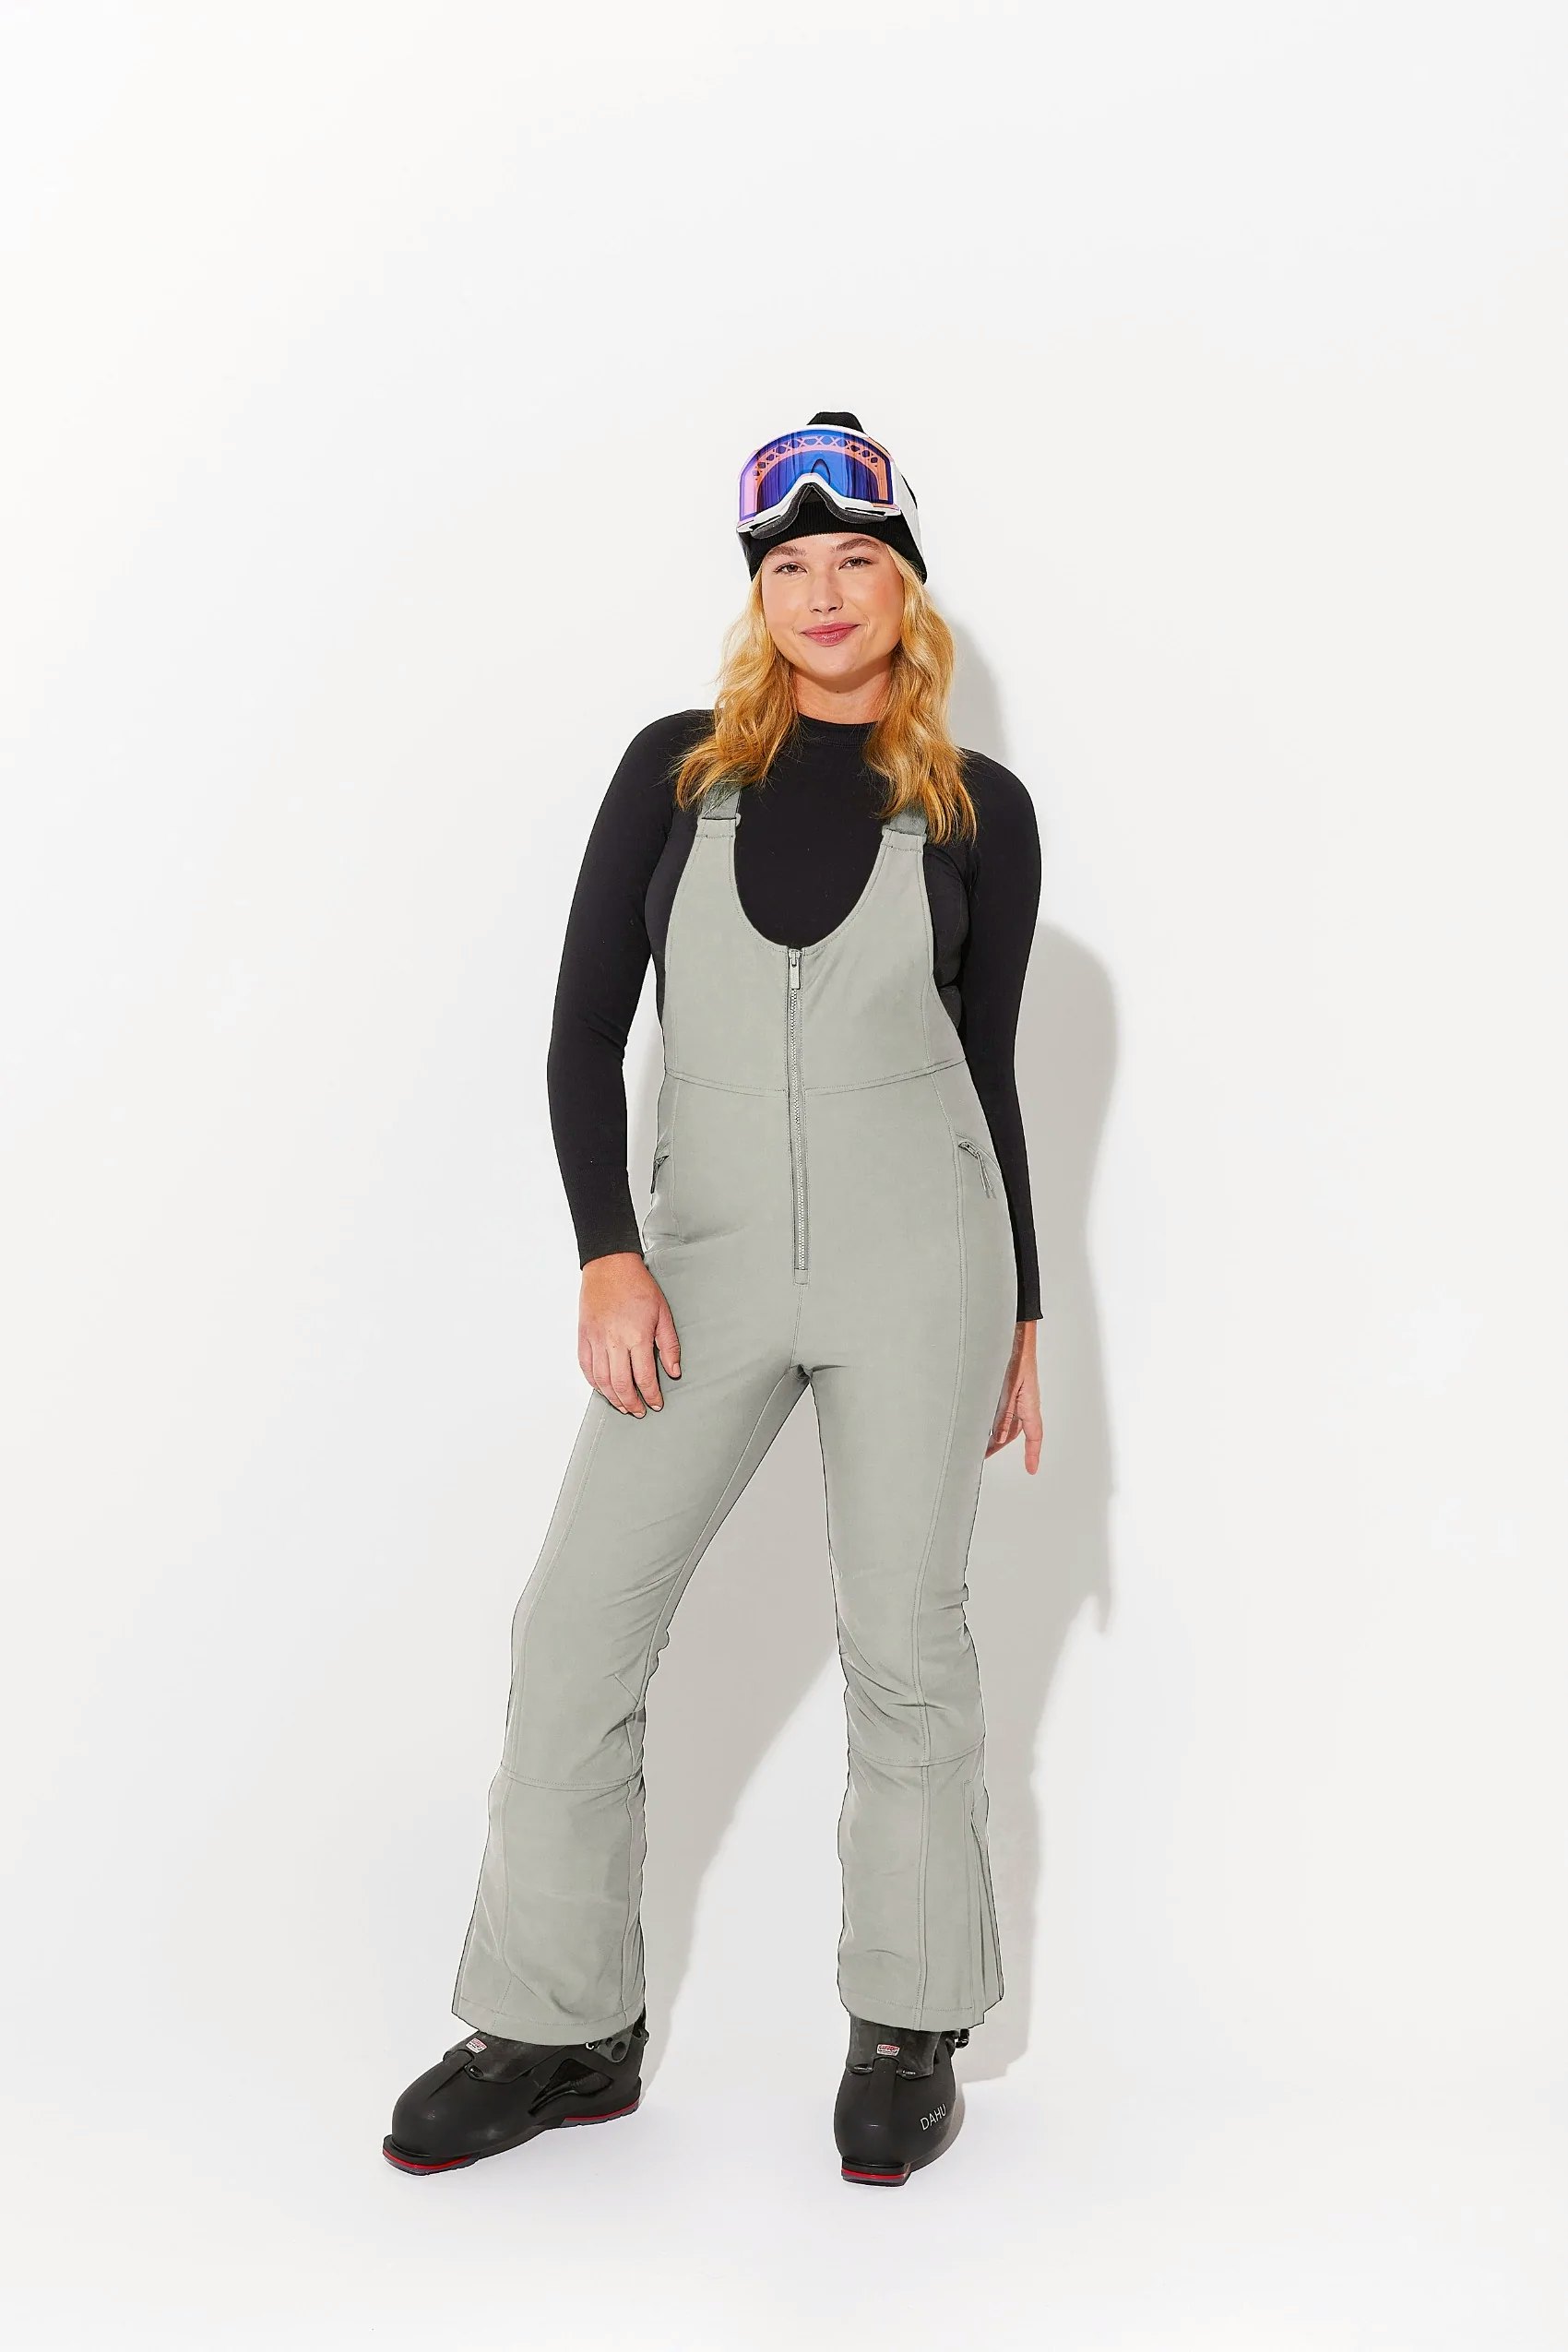 Skiwear Brand Halfdays is Made for Women, by Women - 303 Magazine